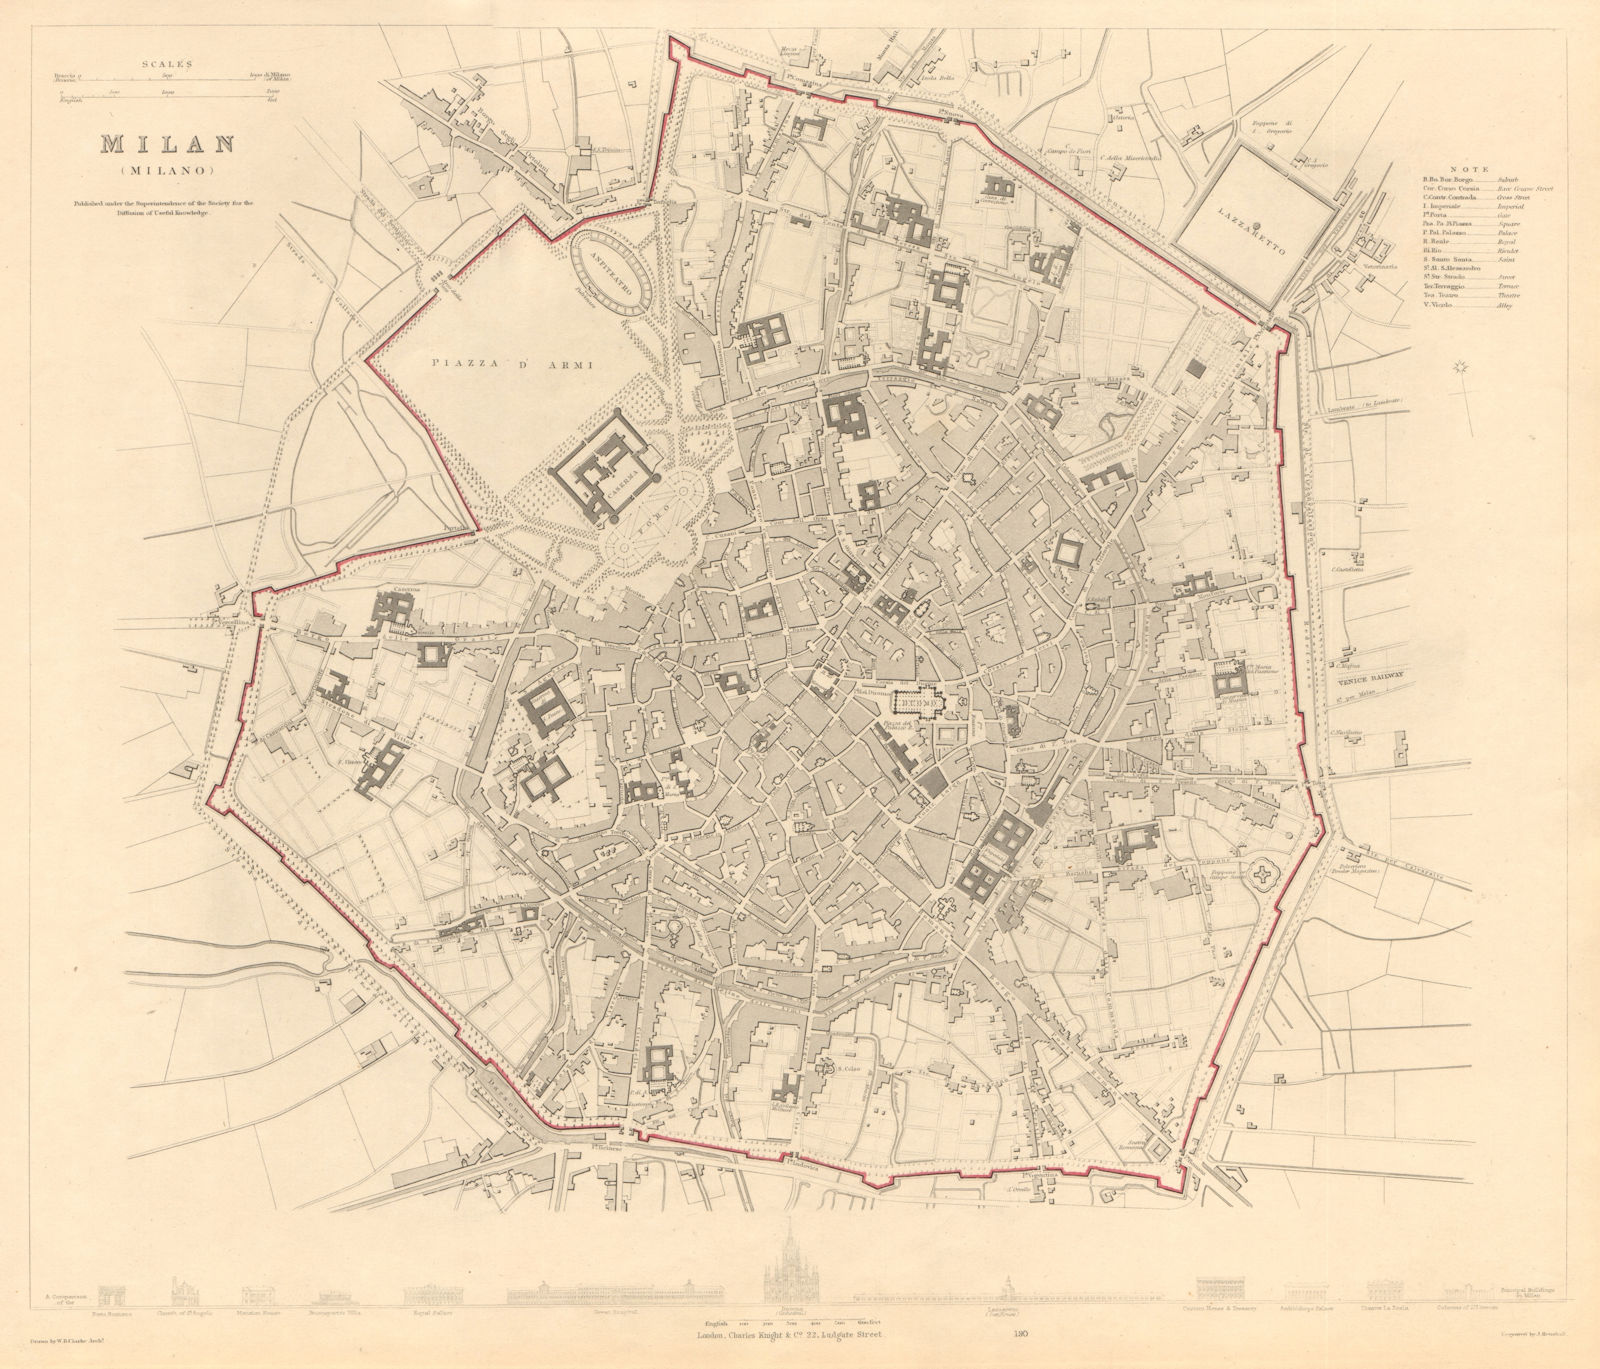 MILAN MILANO. Antique town city map plan. Main buildings profiles. SDUK 1847